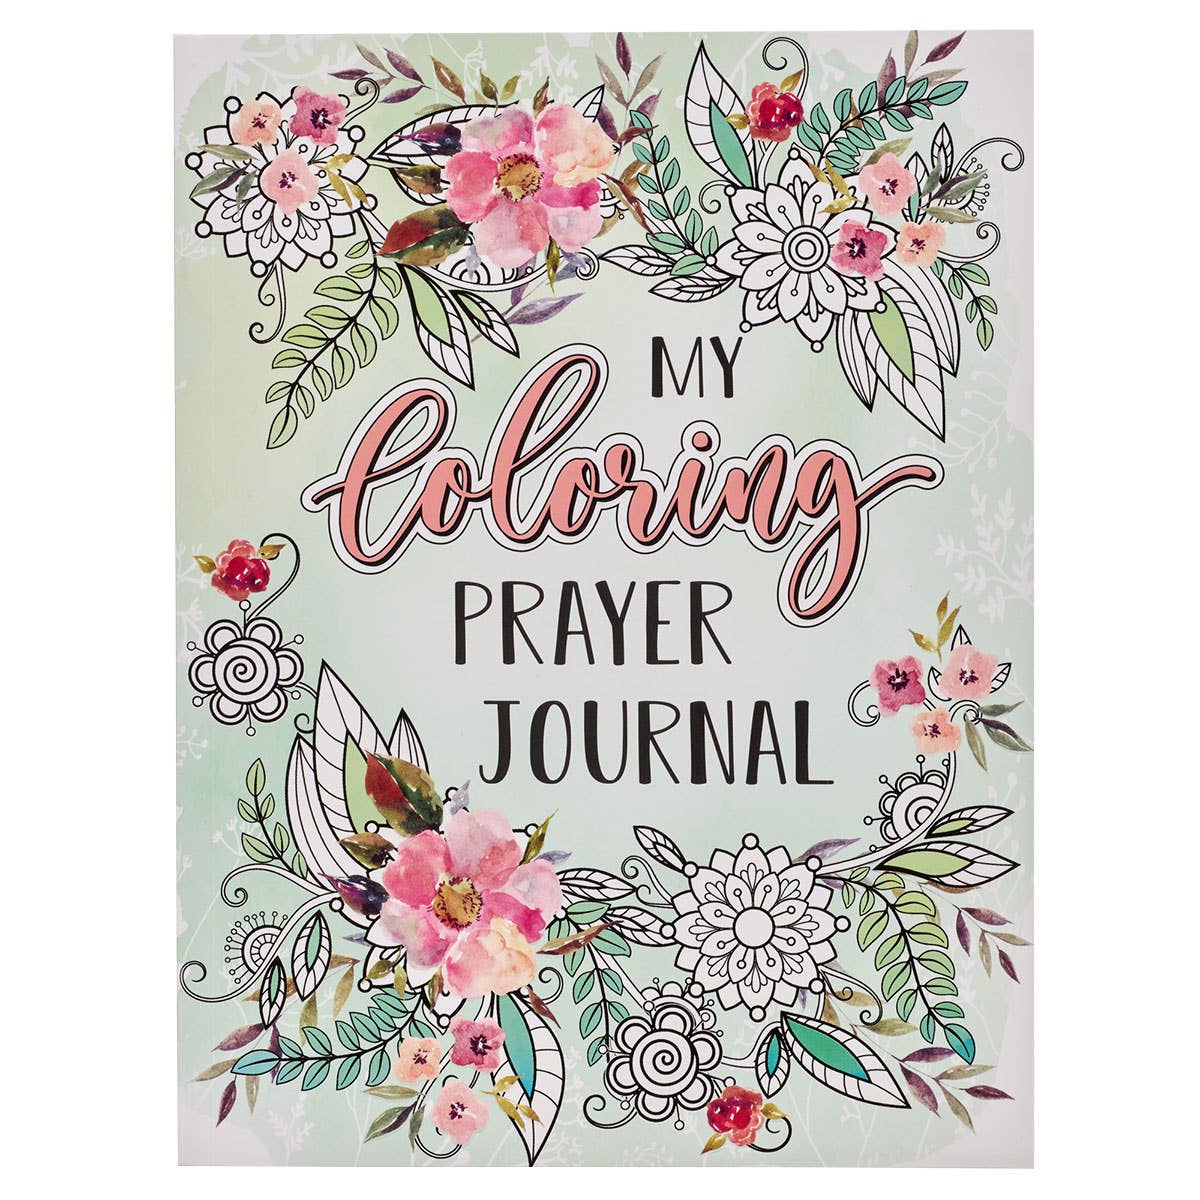 My Coloring Prayer Journal